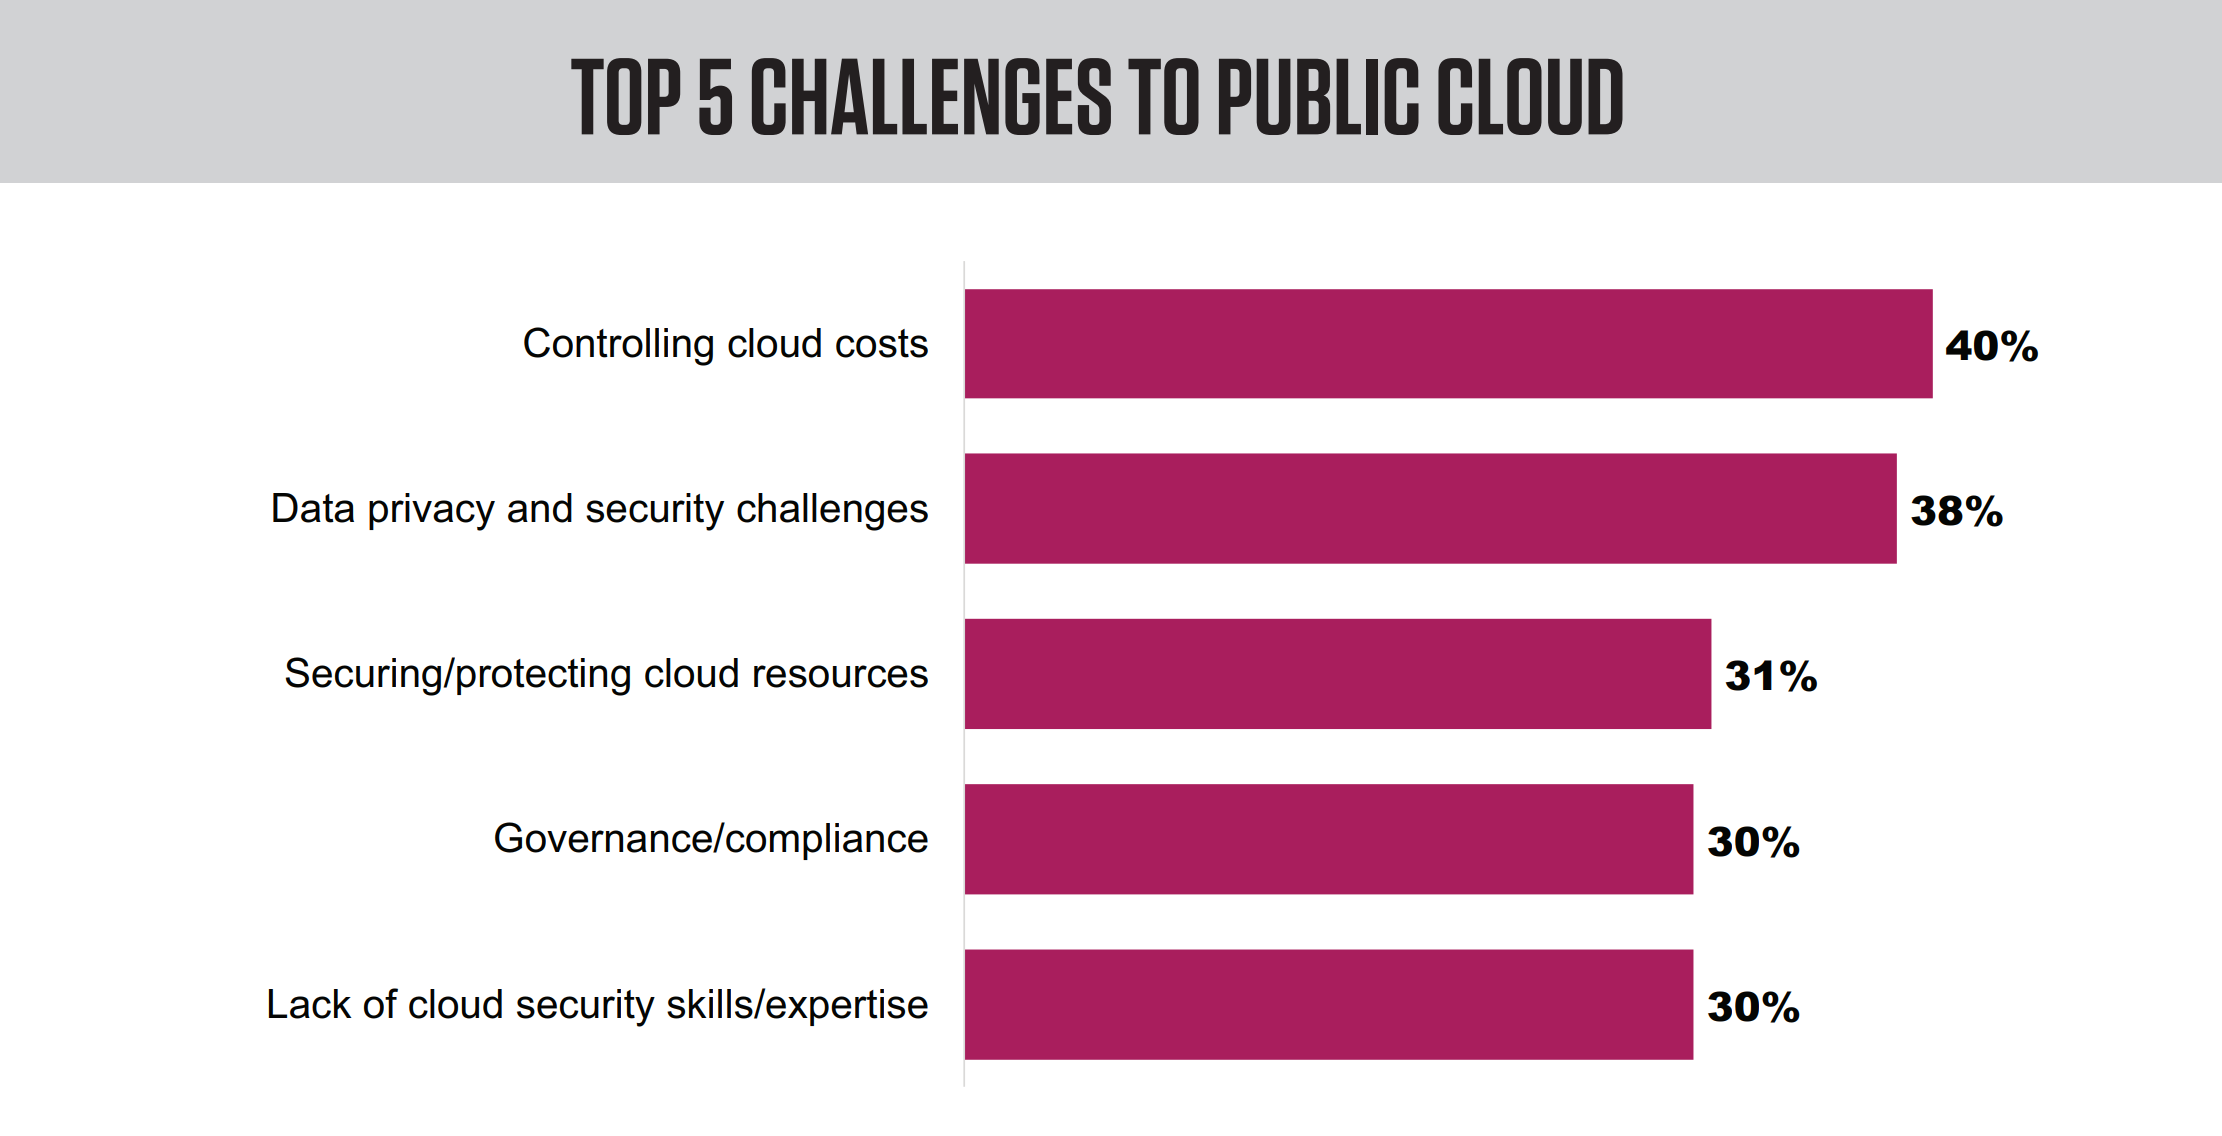 Top challenges to public cloud